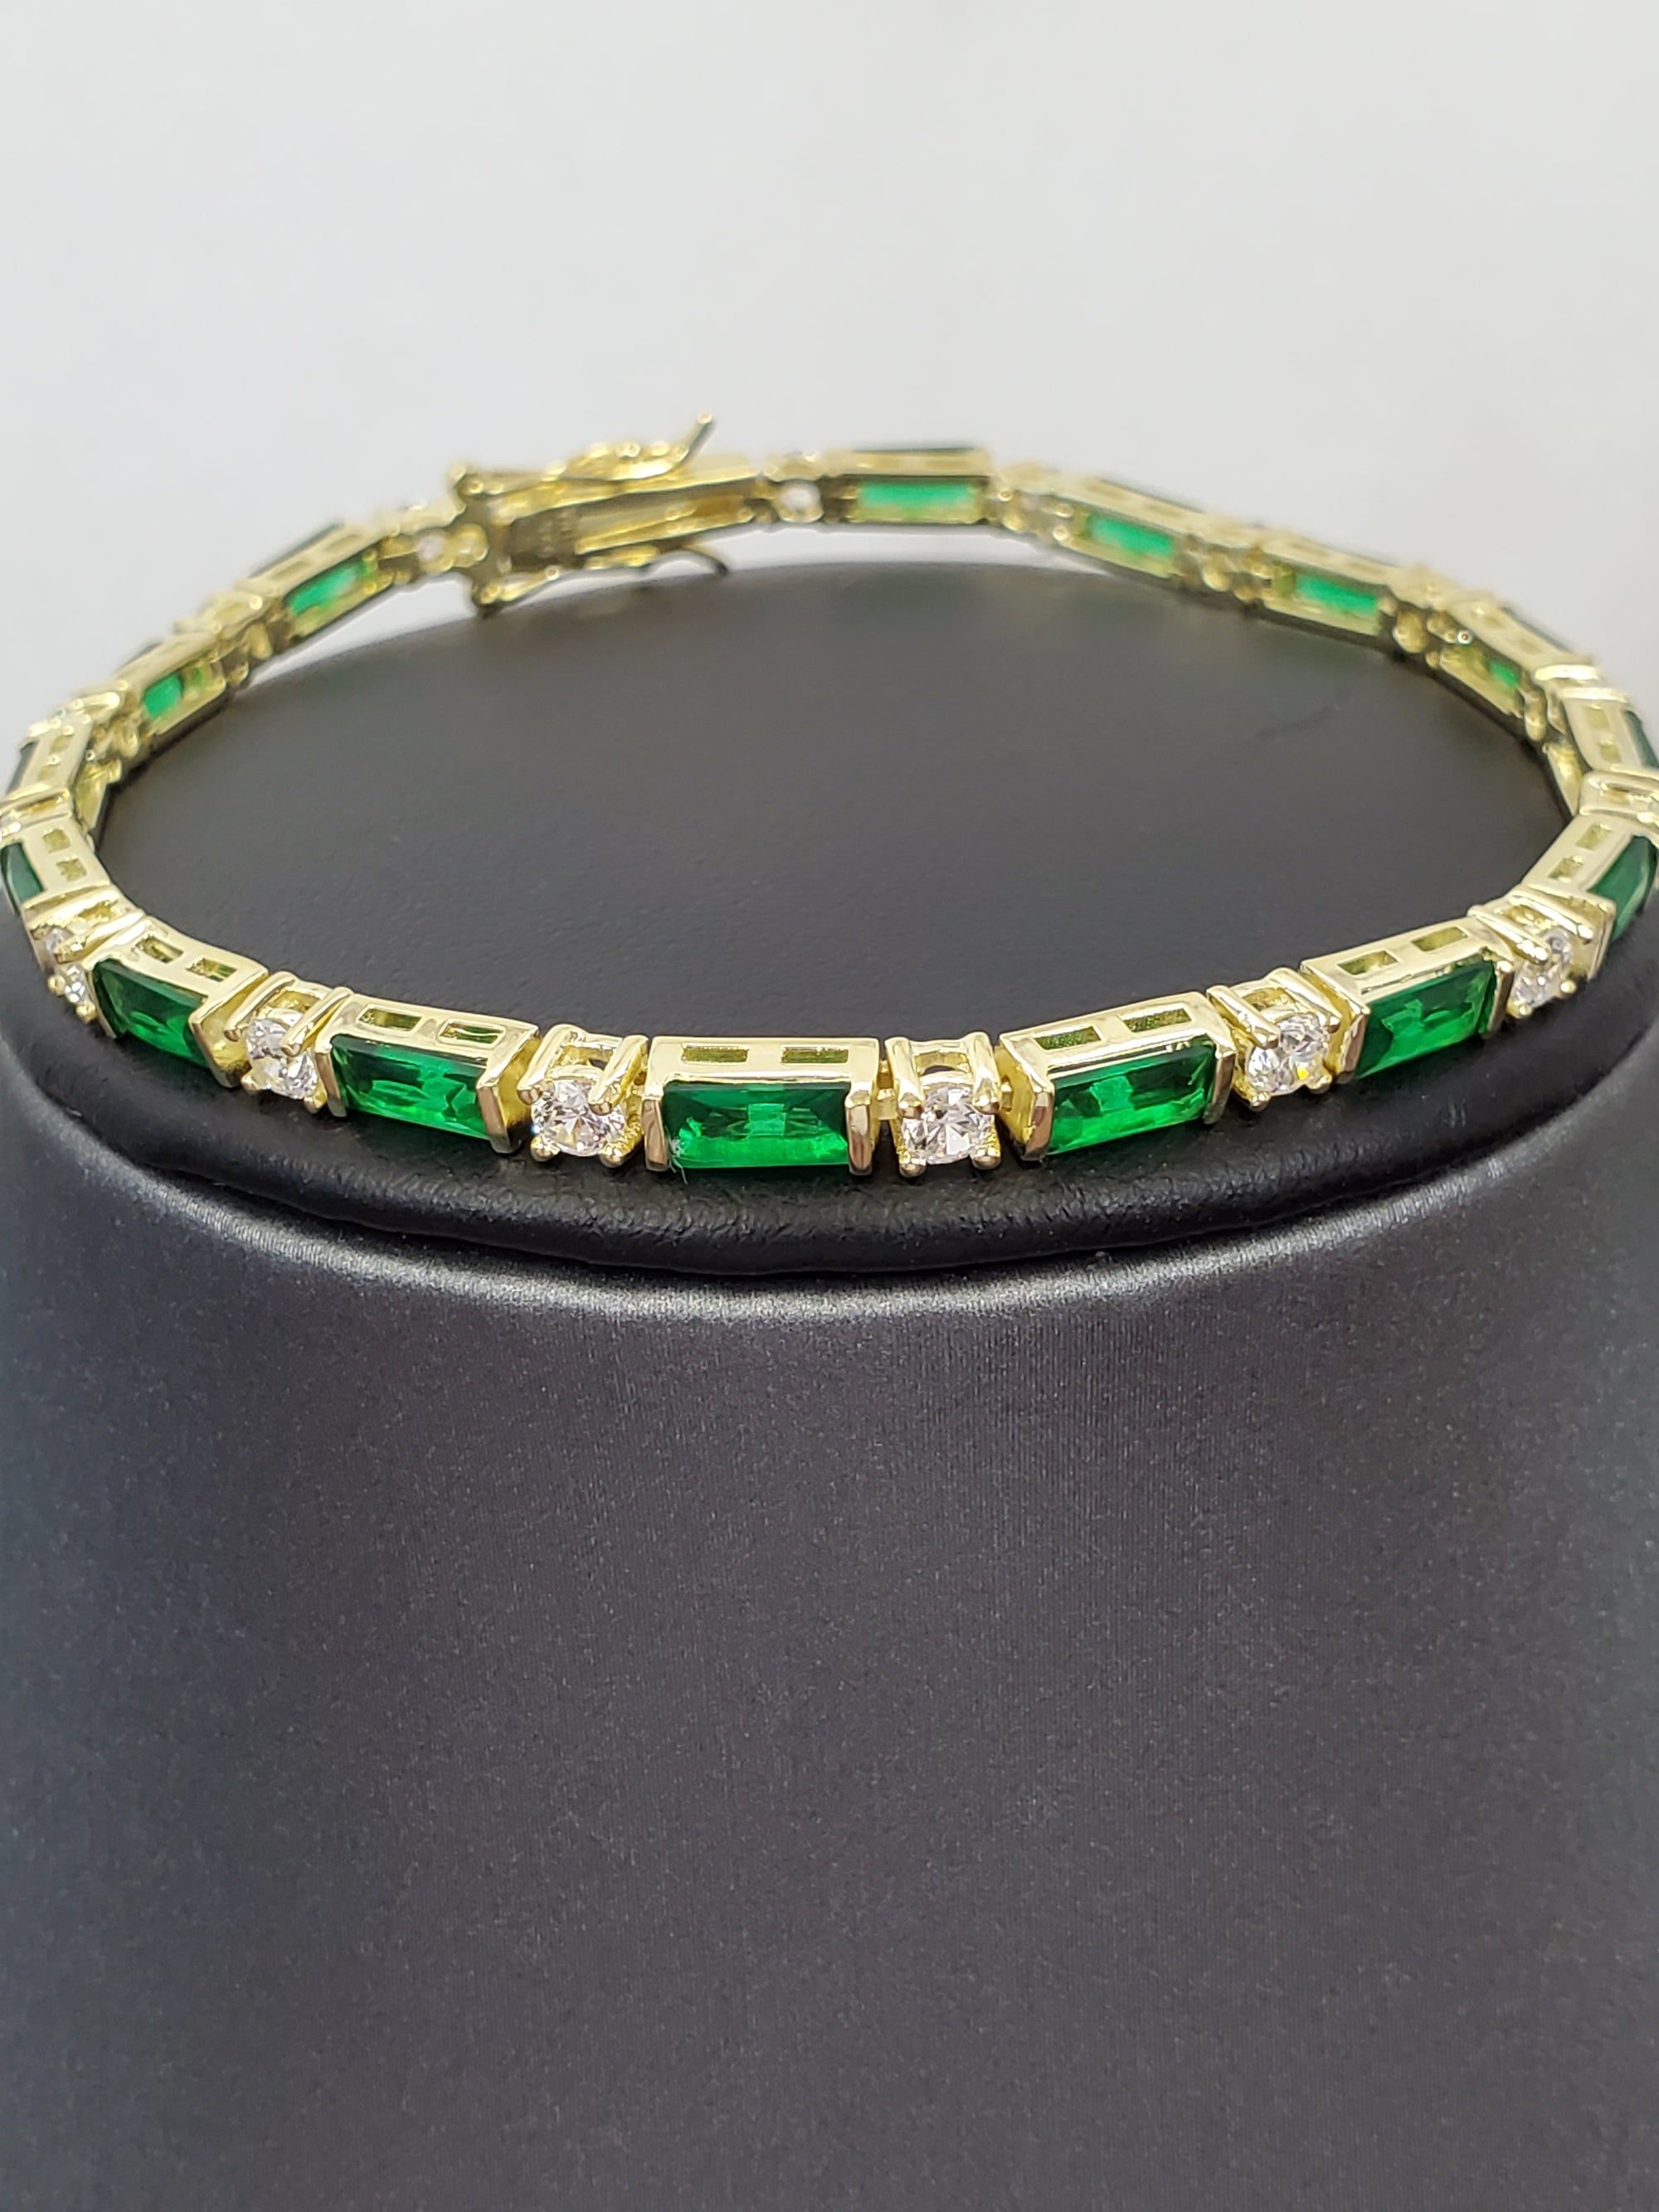 925 Solid Sterling Silver GoldTone Rectangle Emerald CZ & RD Cz Bracelet 7.25"